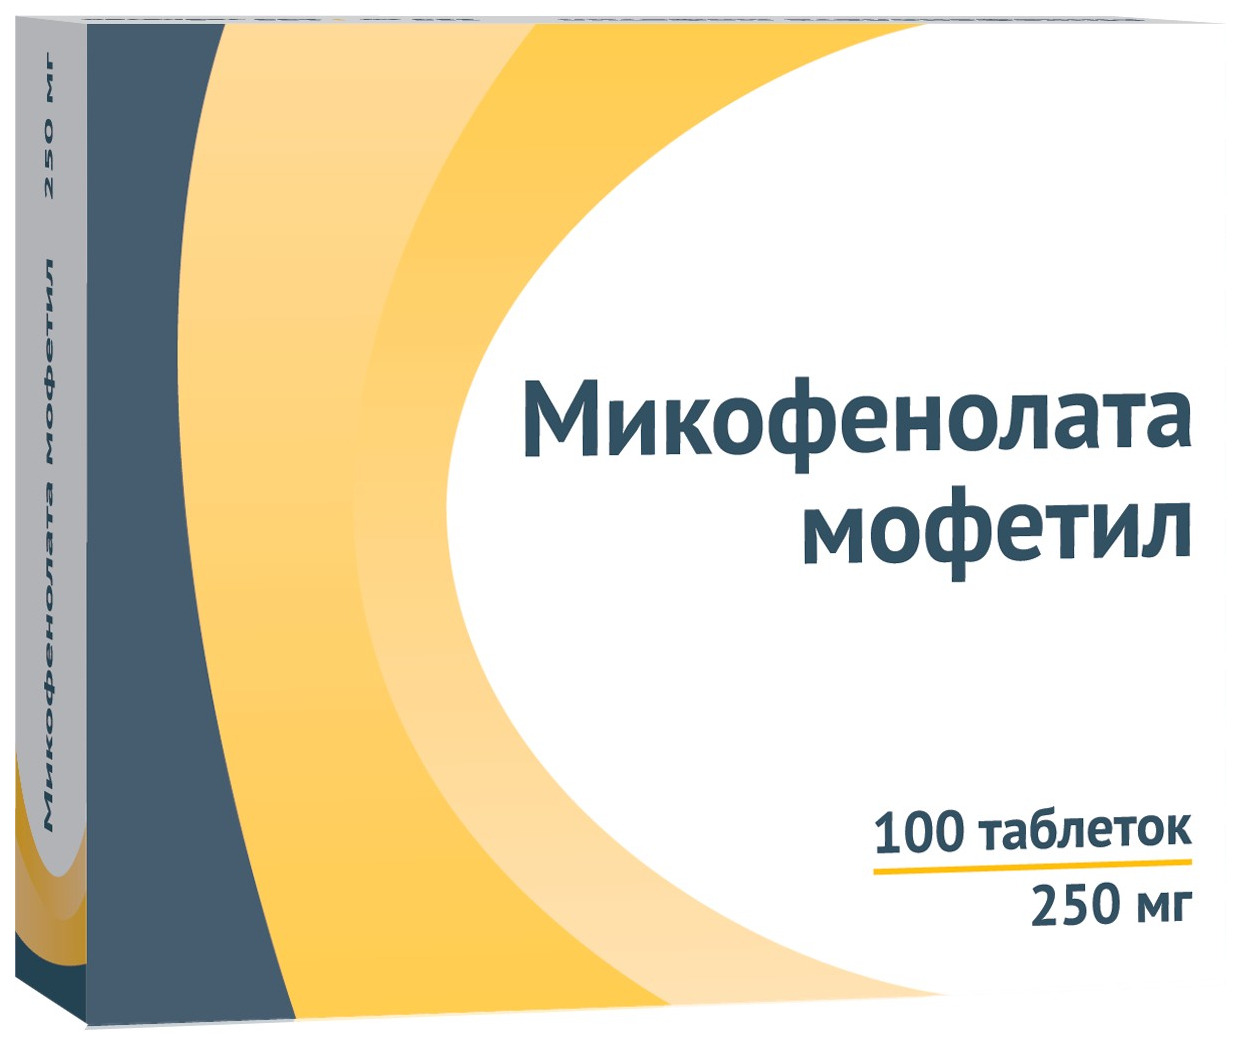 Купить Микофенолата мофетил таблетки 250 мг 100 шт., Озон ООО, Россия